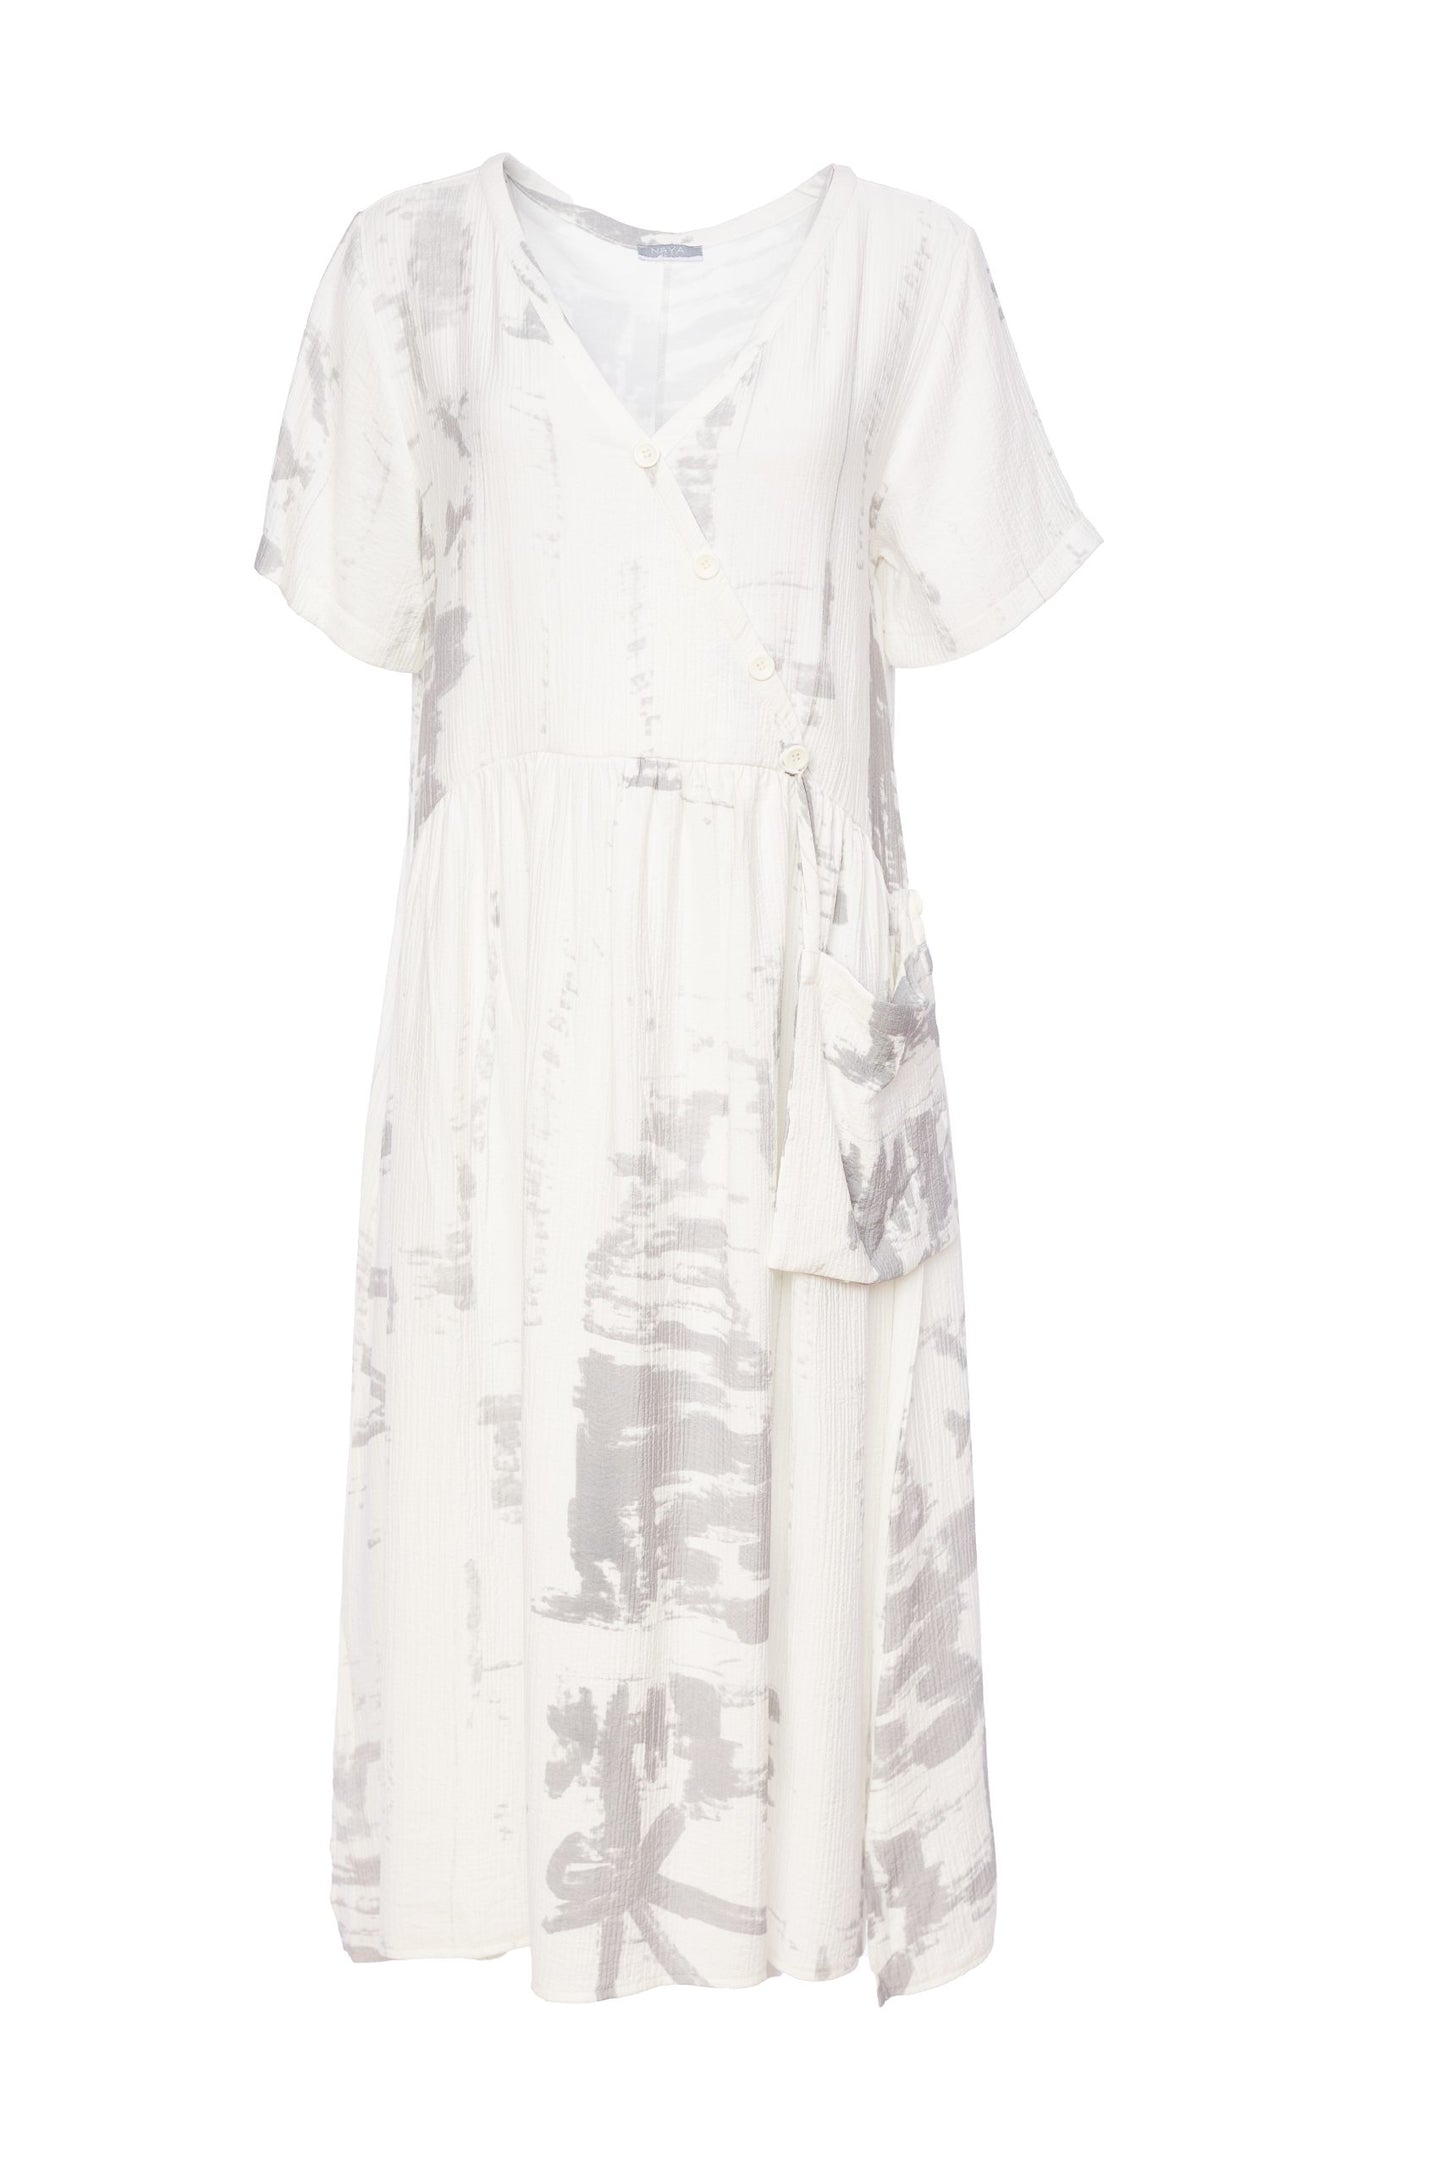 Naya White & Mink Dress with Mock Pocket